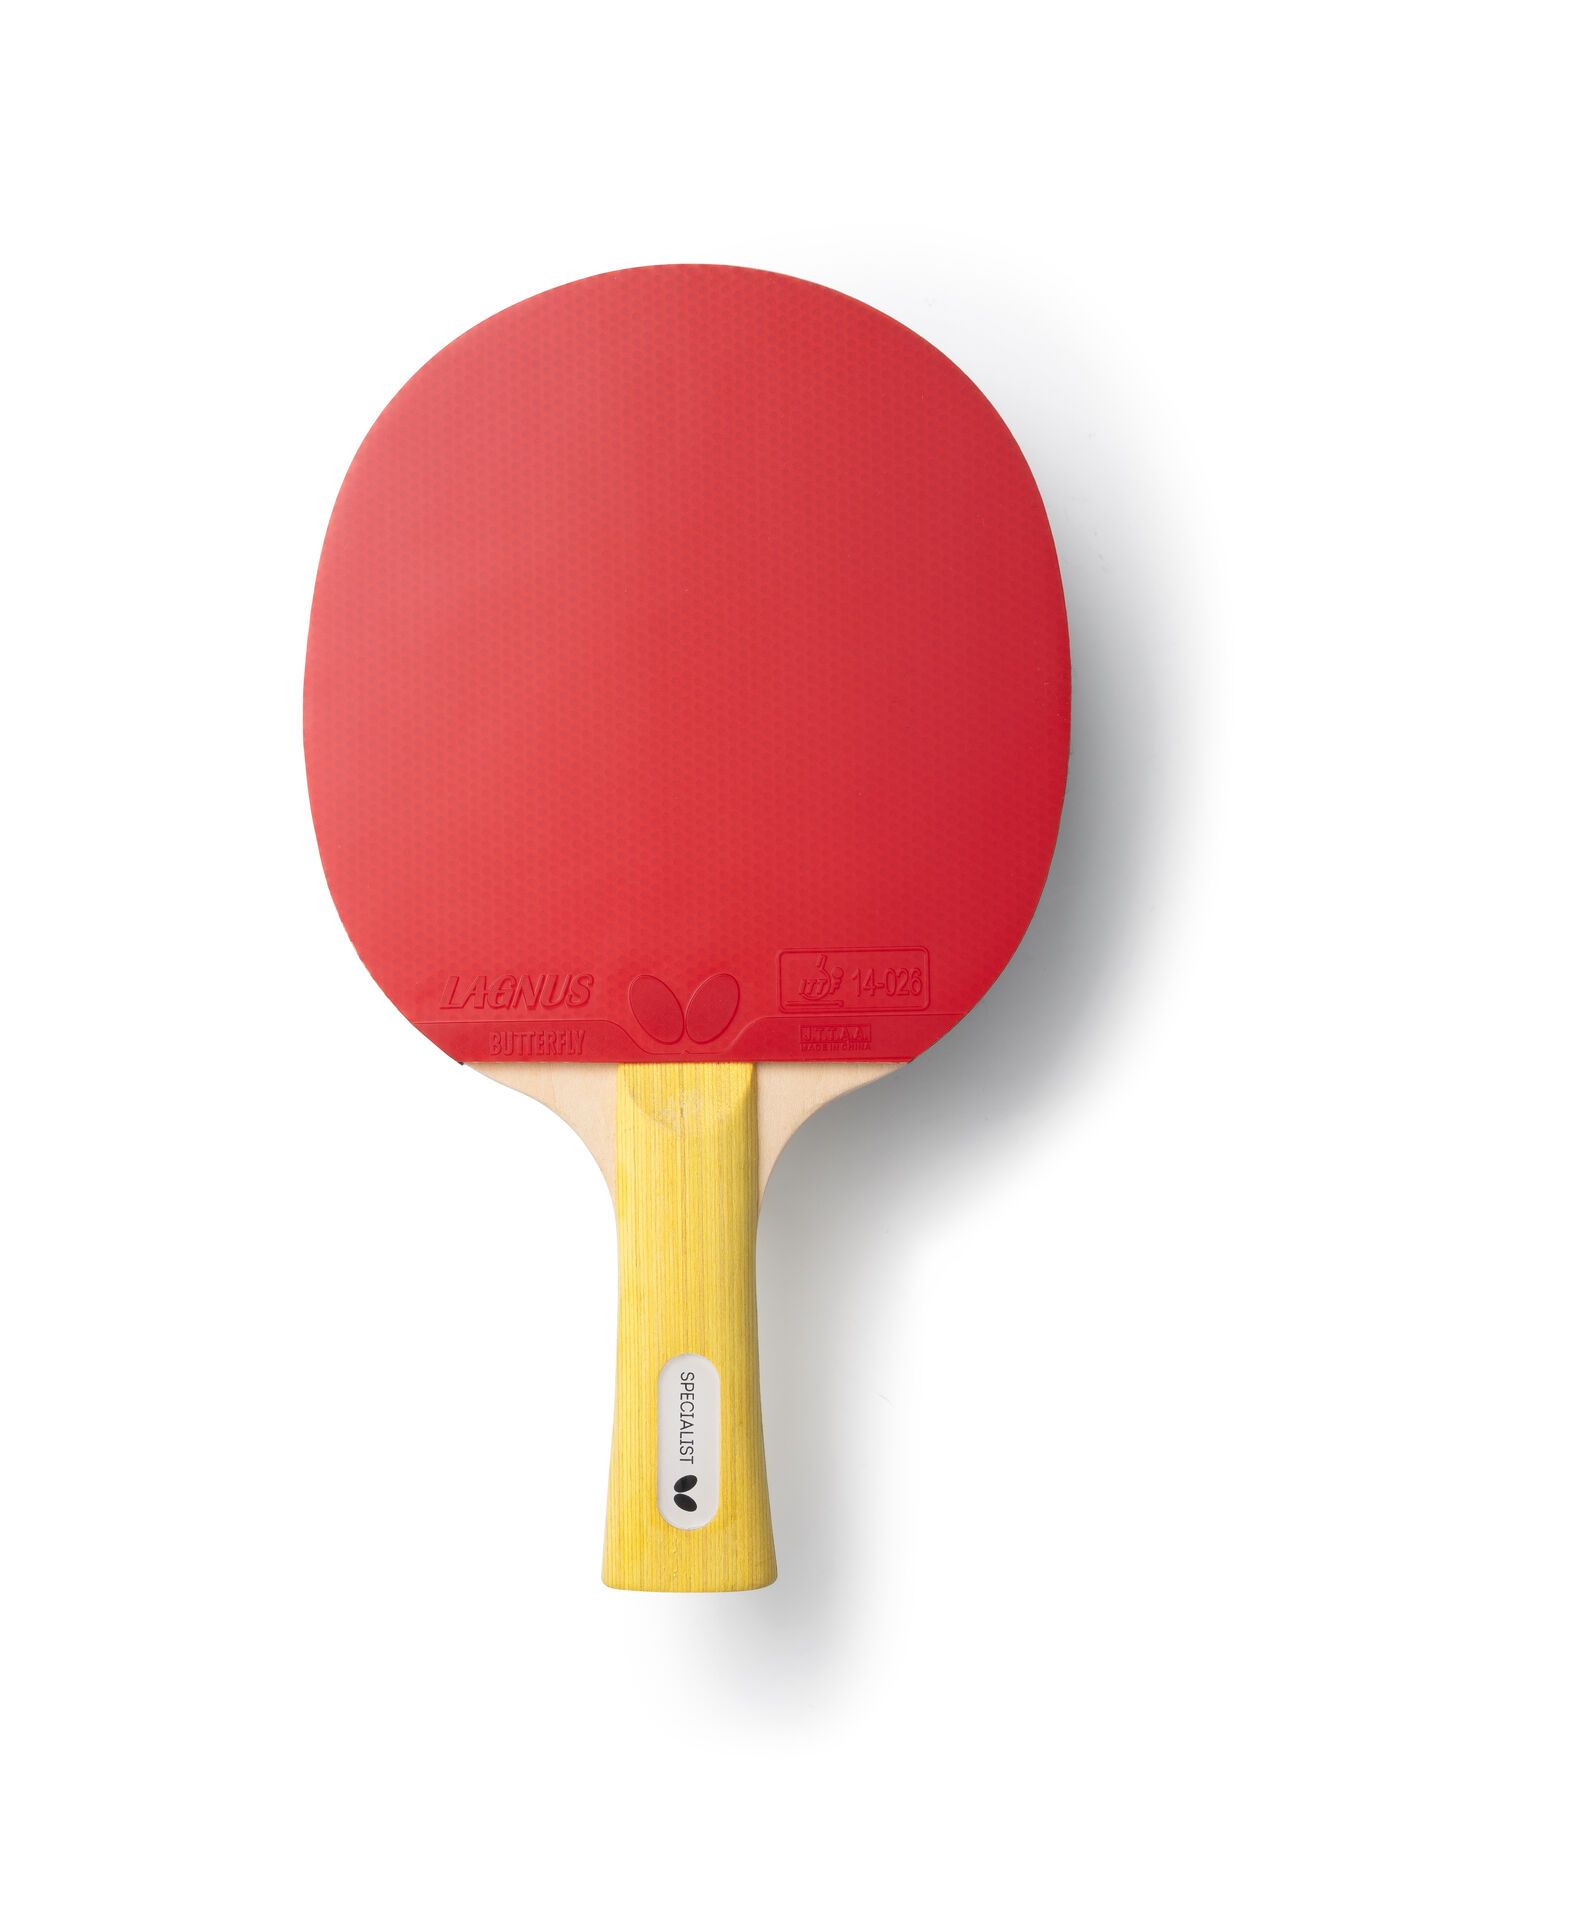 Elige la pala de ping pong según tu juego - Blog de Pingpongplus